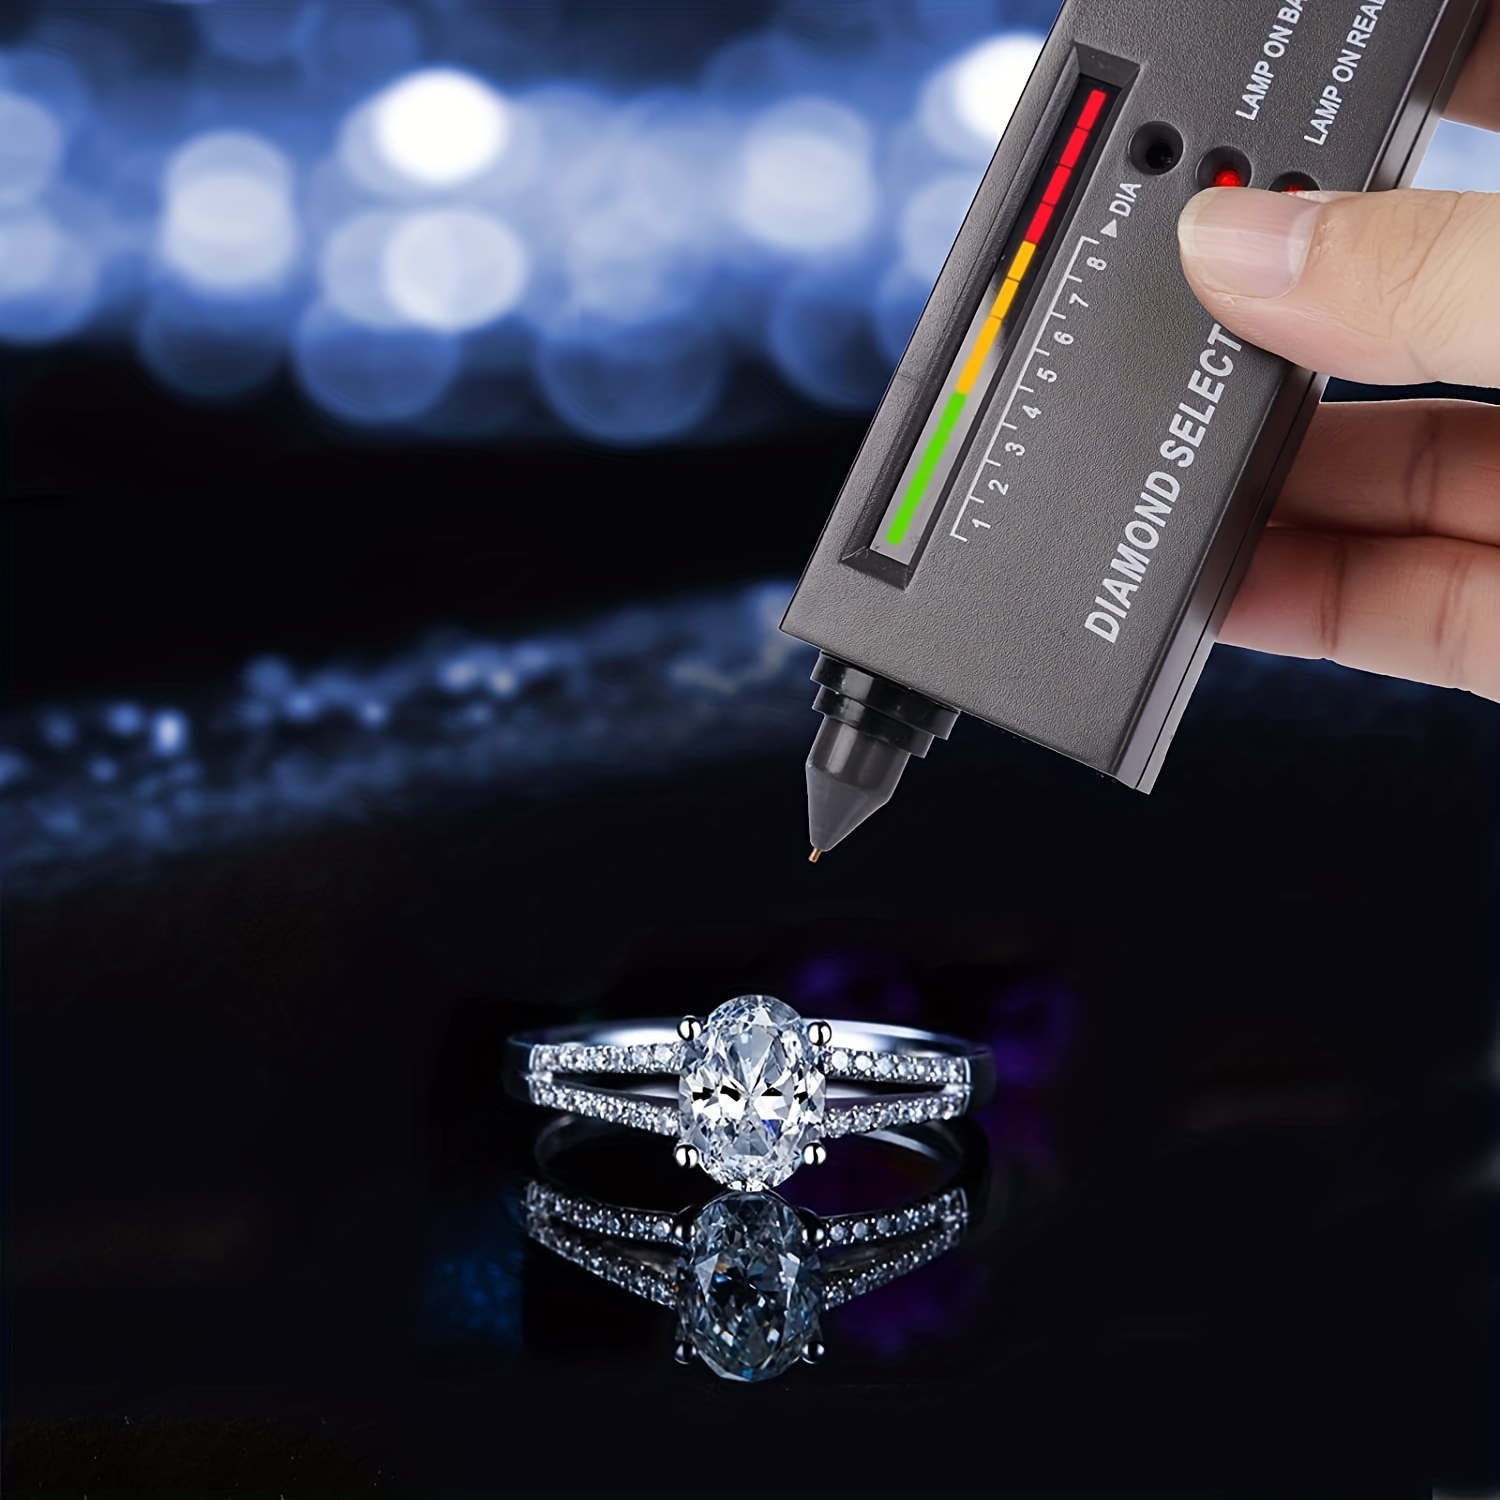 Diamond Tester Gemstone Selector Ii Gems Led Indicator Jewel Jewelry Tool  Test Portable Electronic Diamond Detector For Beginners And Experts - Temu  Austria